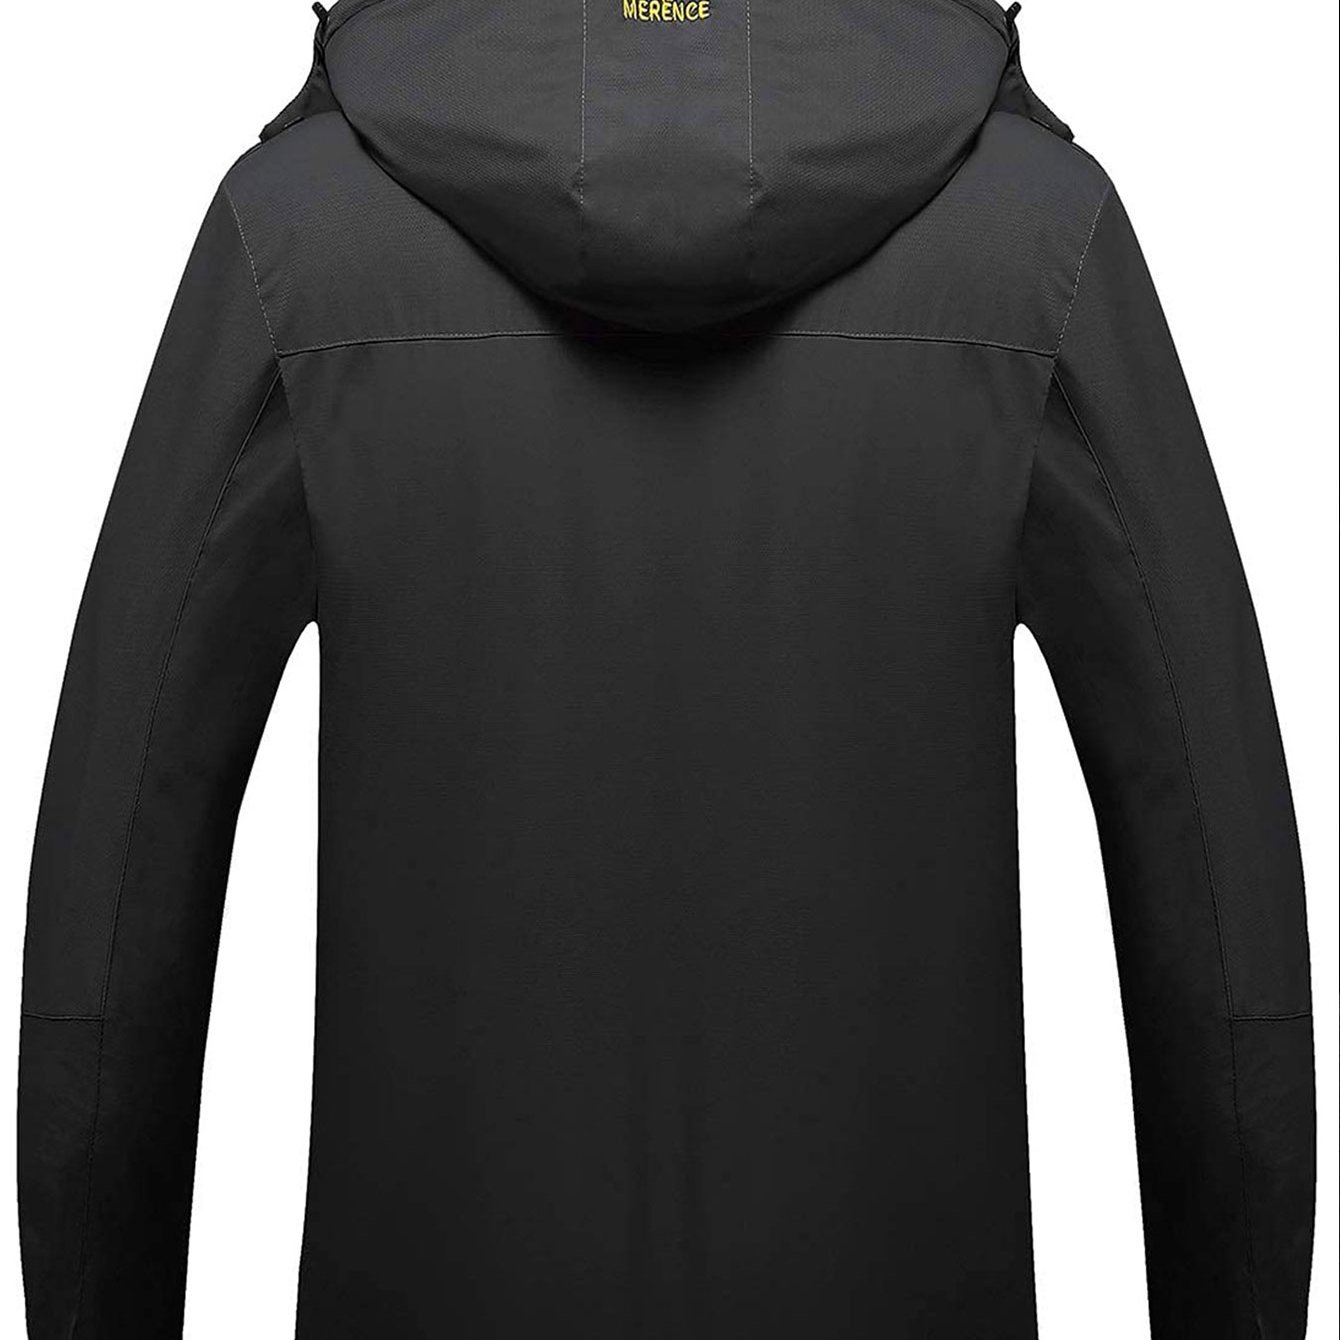 Men's Mountain Waterproof Ski Jacket Windproof Rain Jacket | Shop Now ...